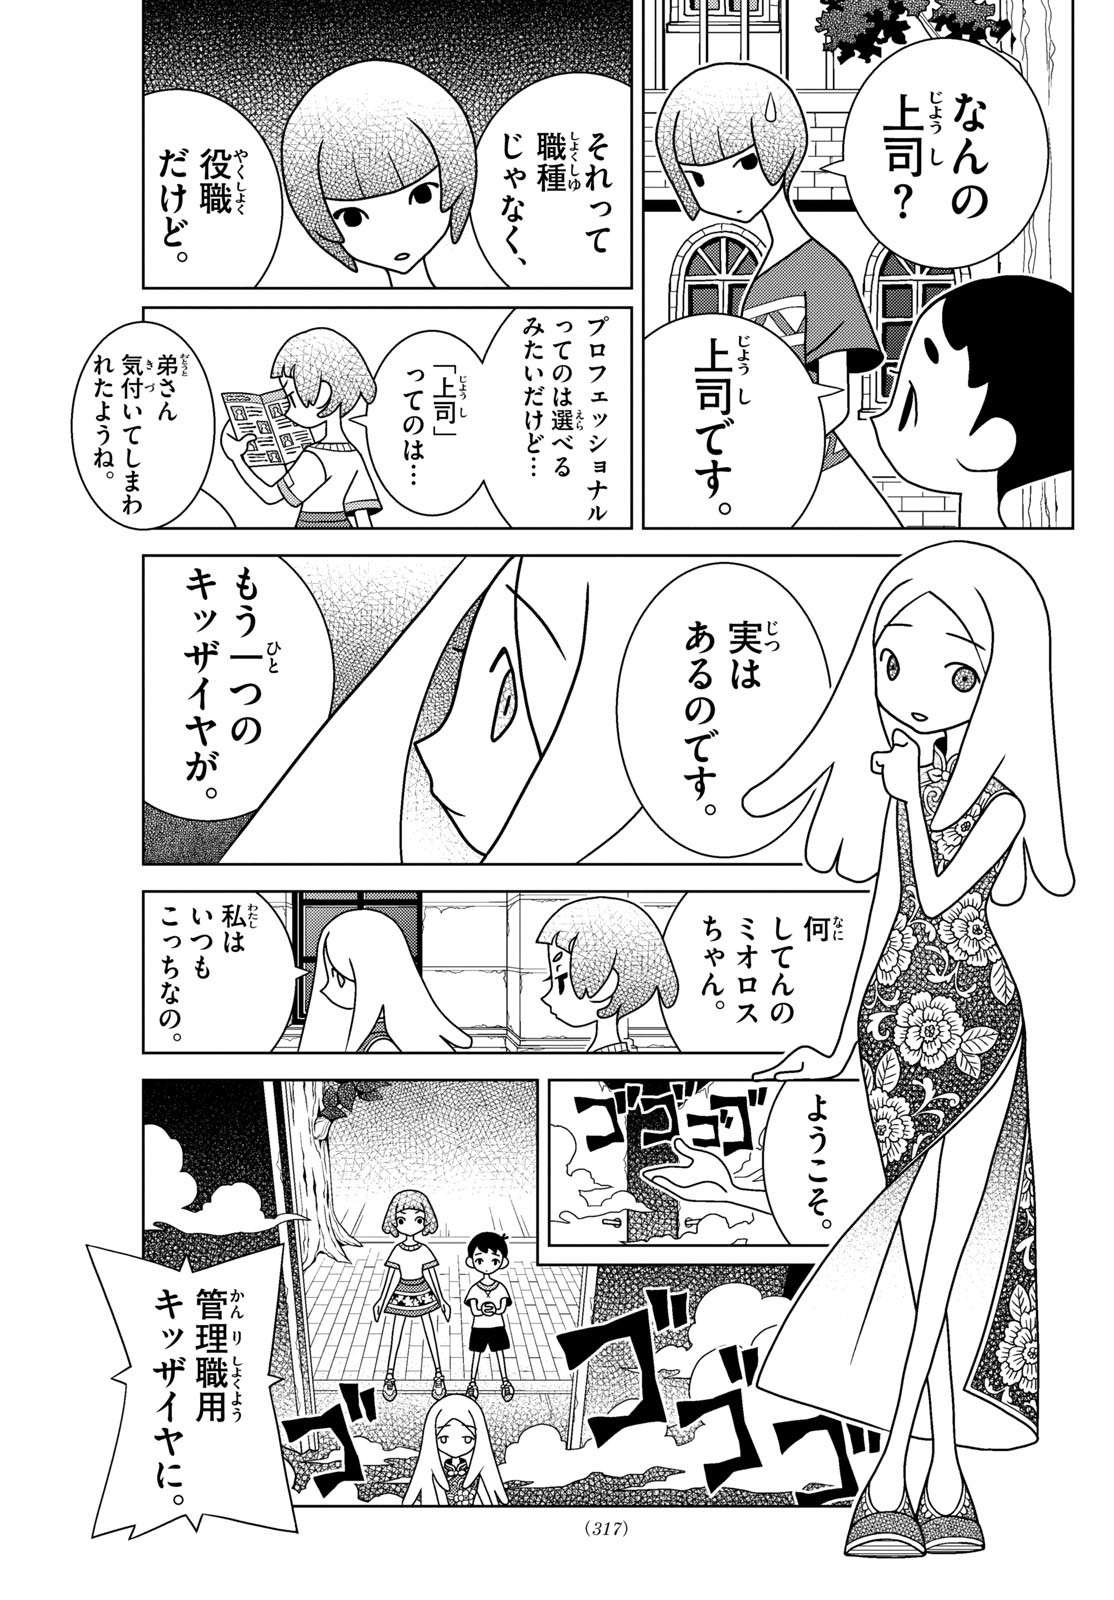 Shibuya Near Family - Chapter 066 - Page 5